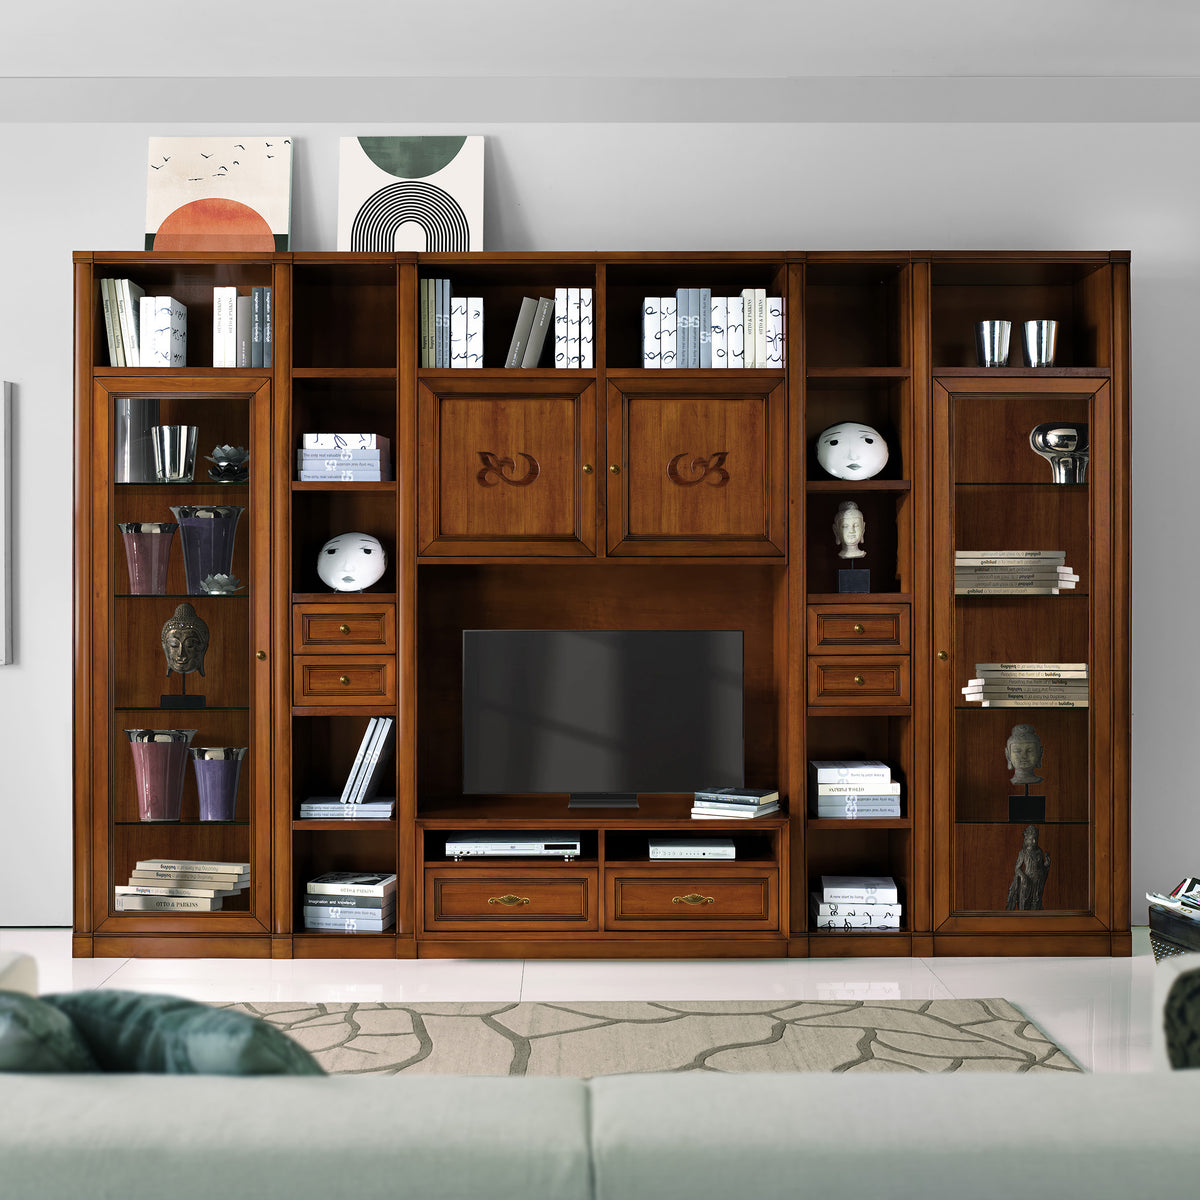 Mobile Living Room Wall L 345 Classic Wooden Cherry Finish Arte D'Este Piombini Collection